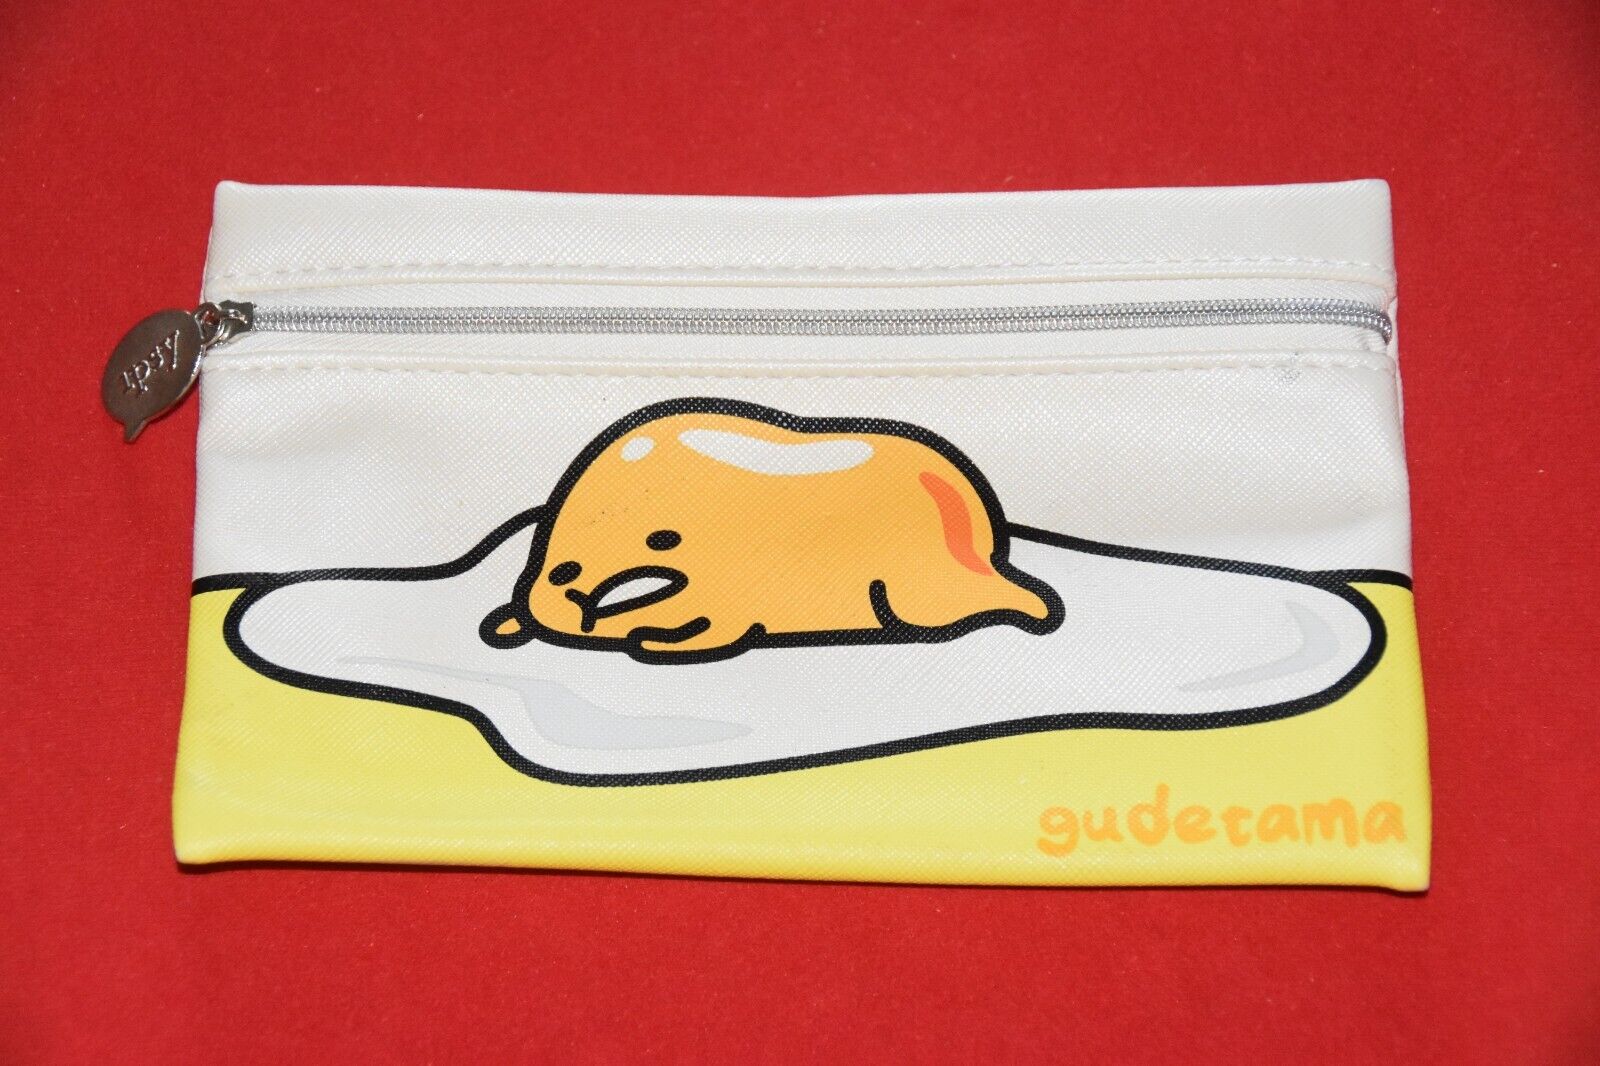 Brand New NWOT Ipsy Gudetama Pouch Cosmetic bag Lazy egg Japan Unused Meh Zipper